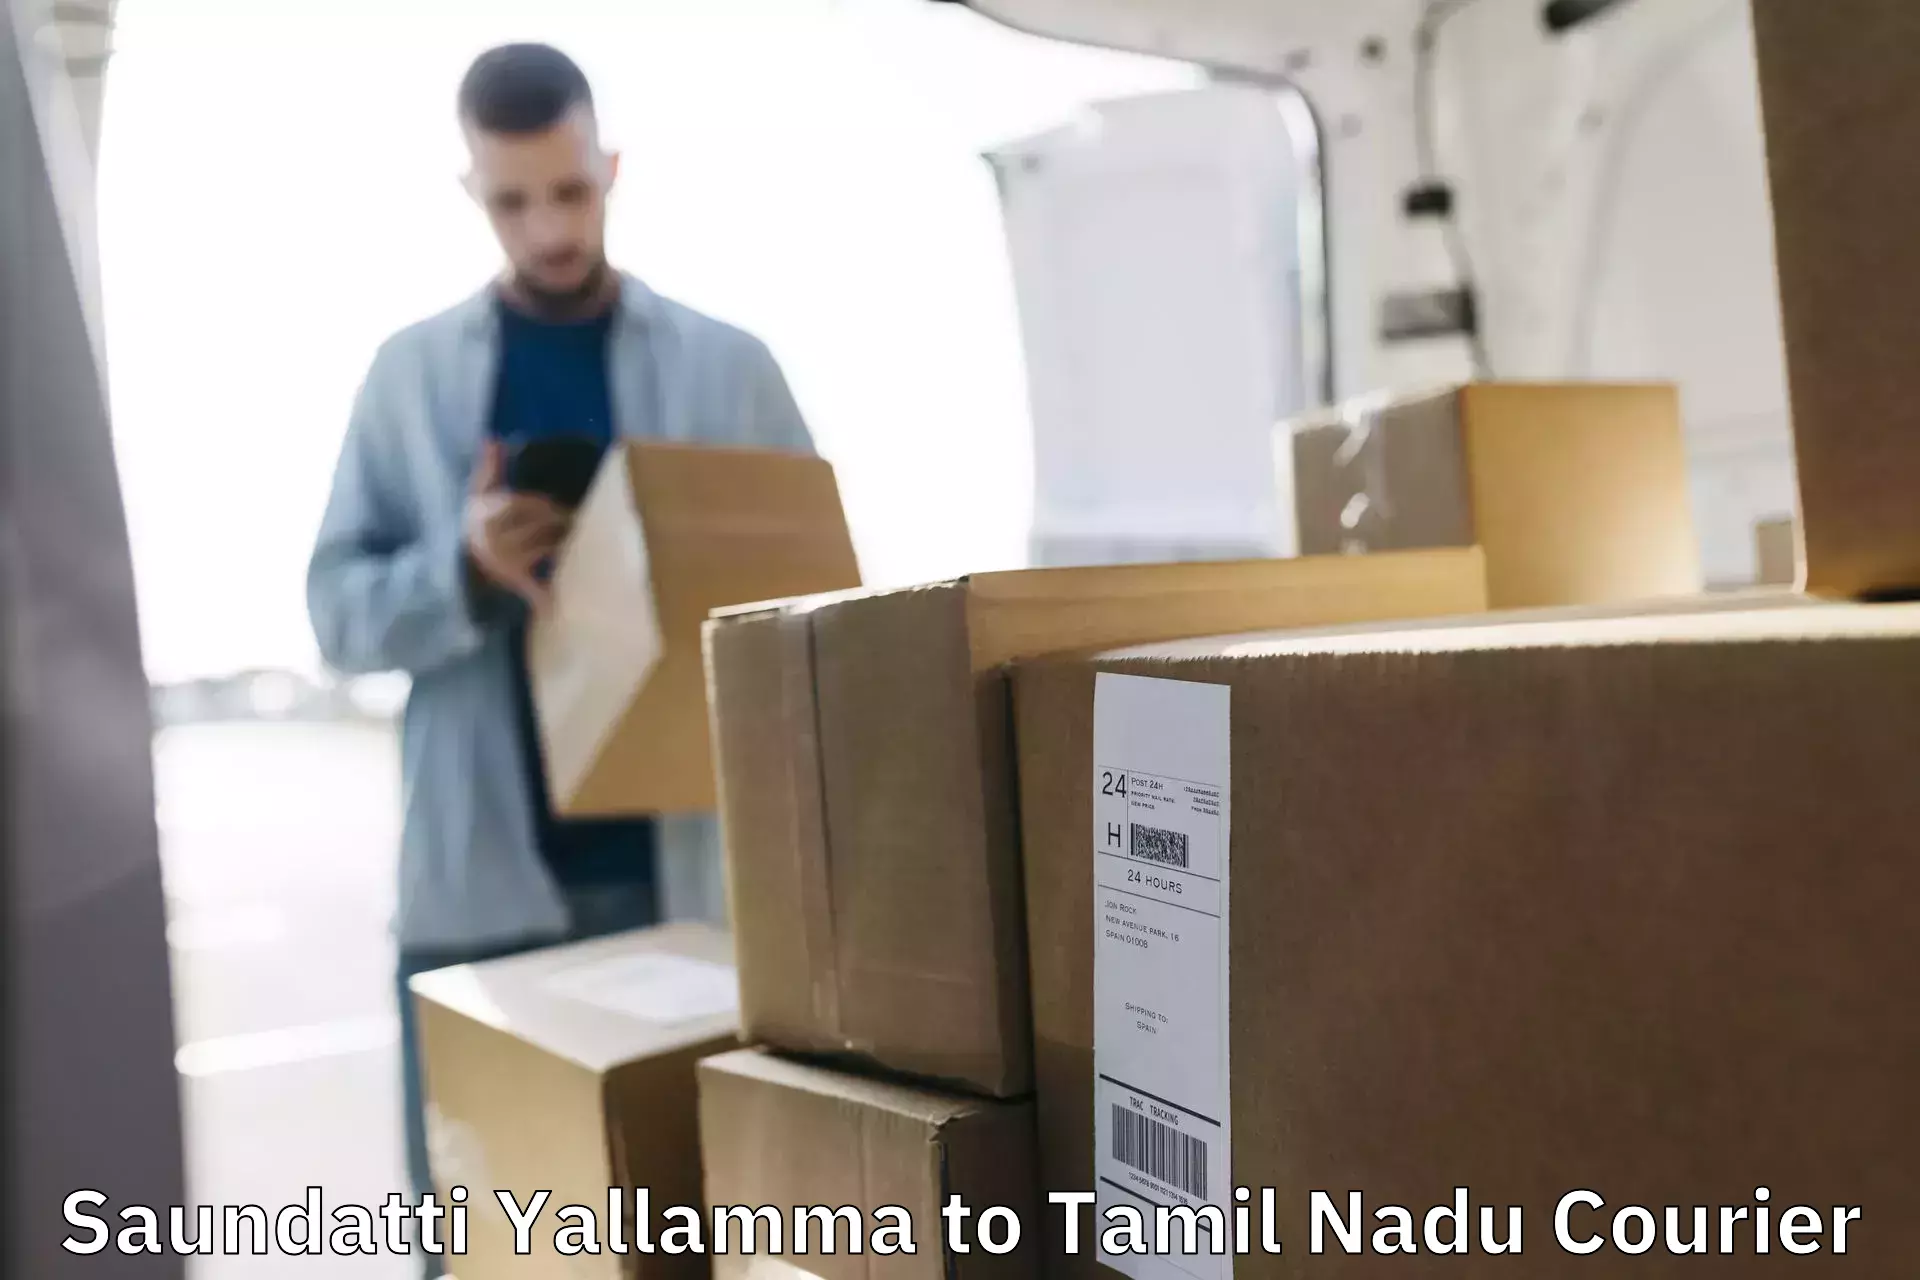 Shipping and handling Saundatti Yallamma to Perunali